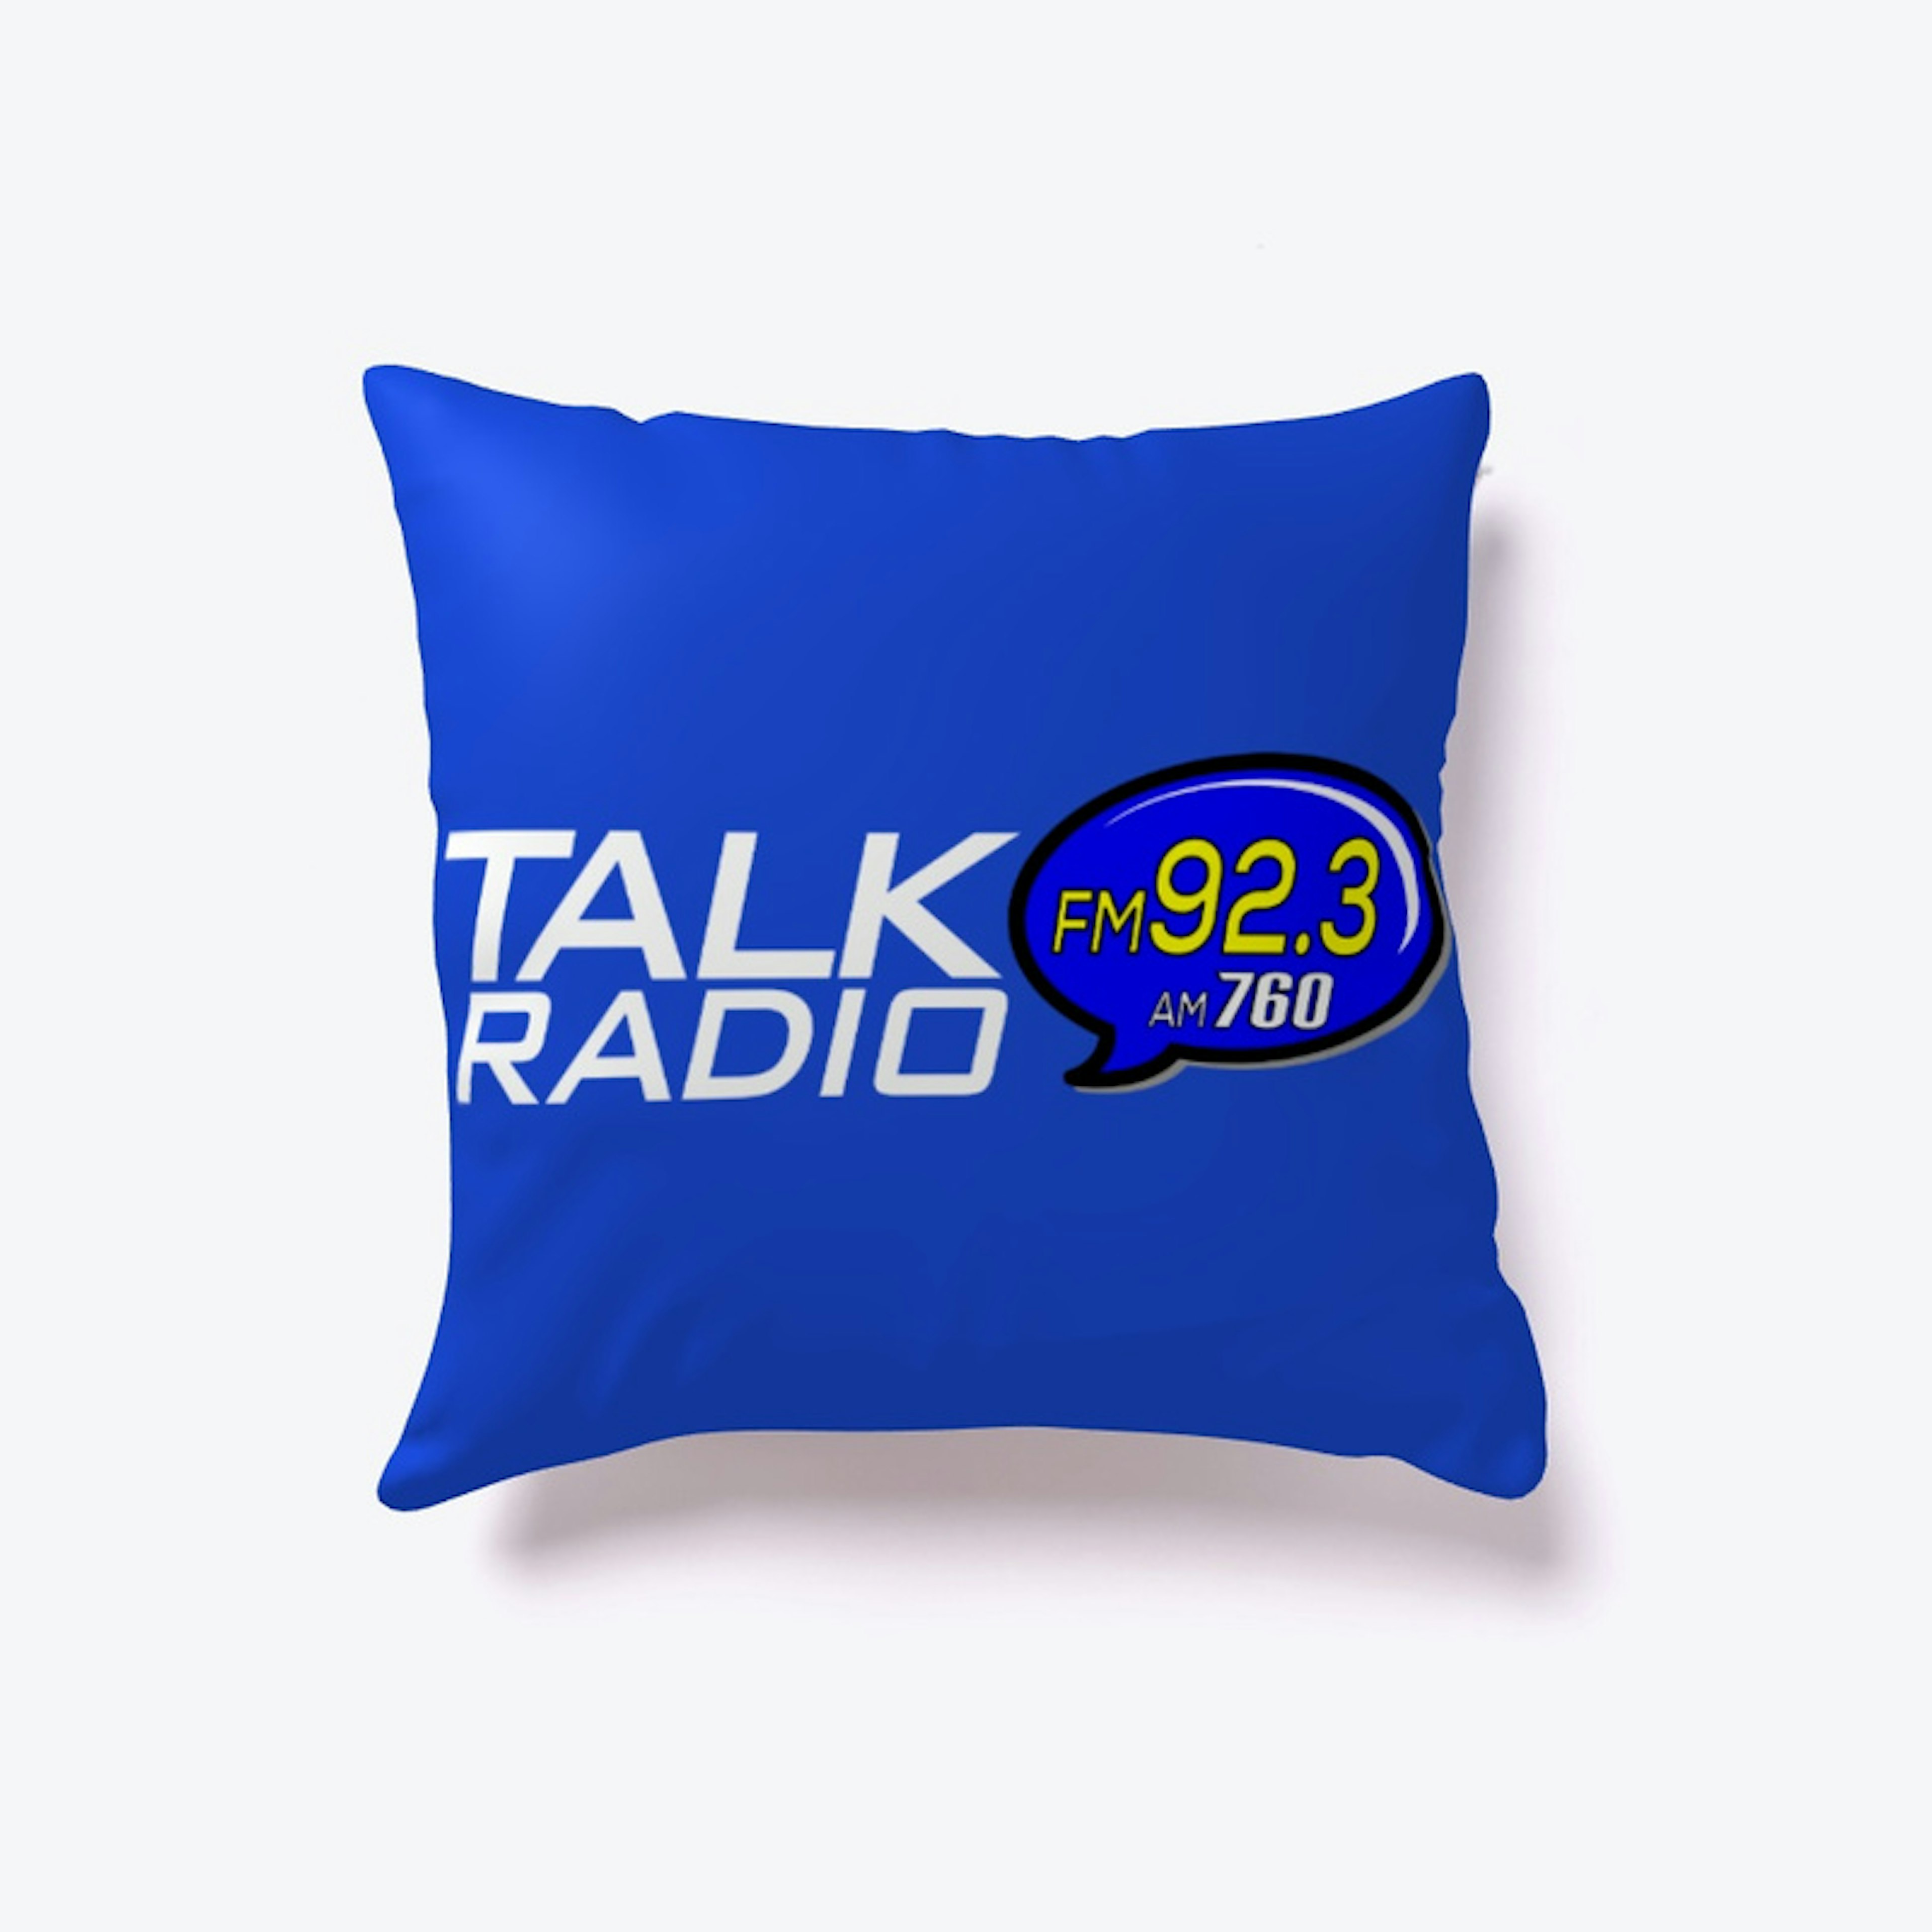 Talk Radio 92.3  / AM 760